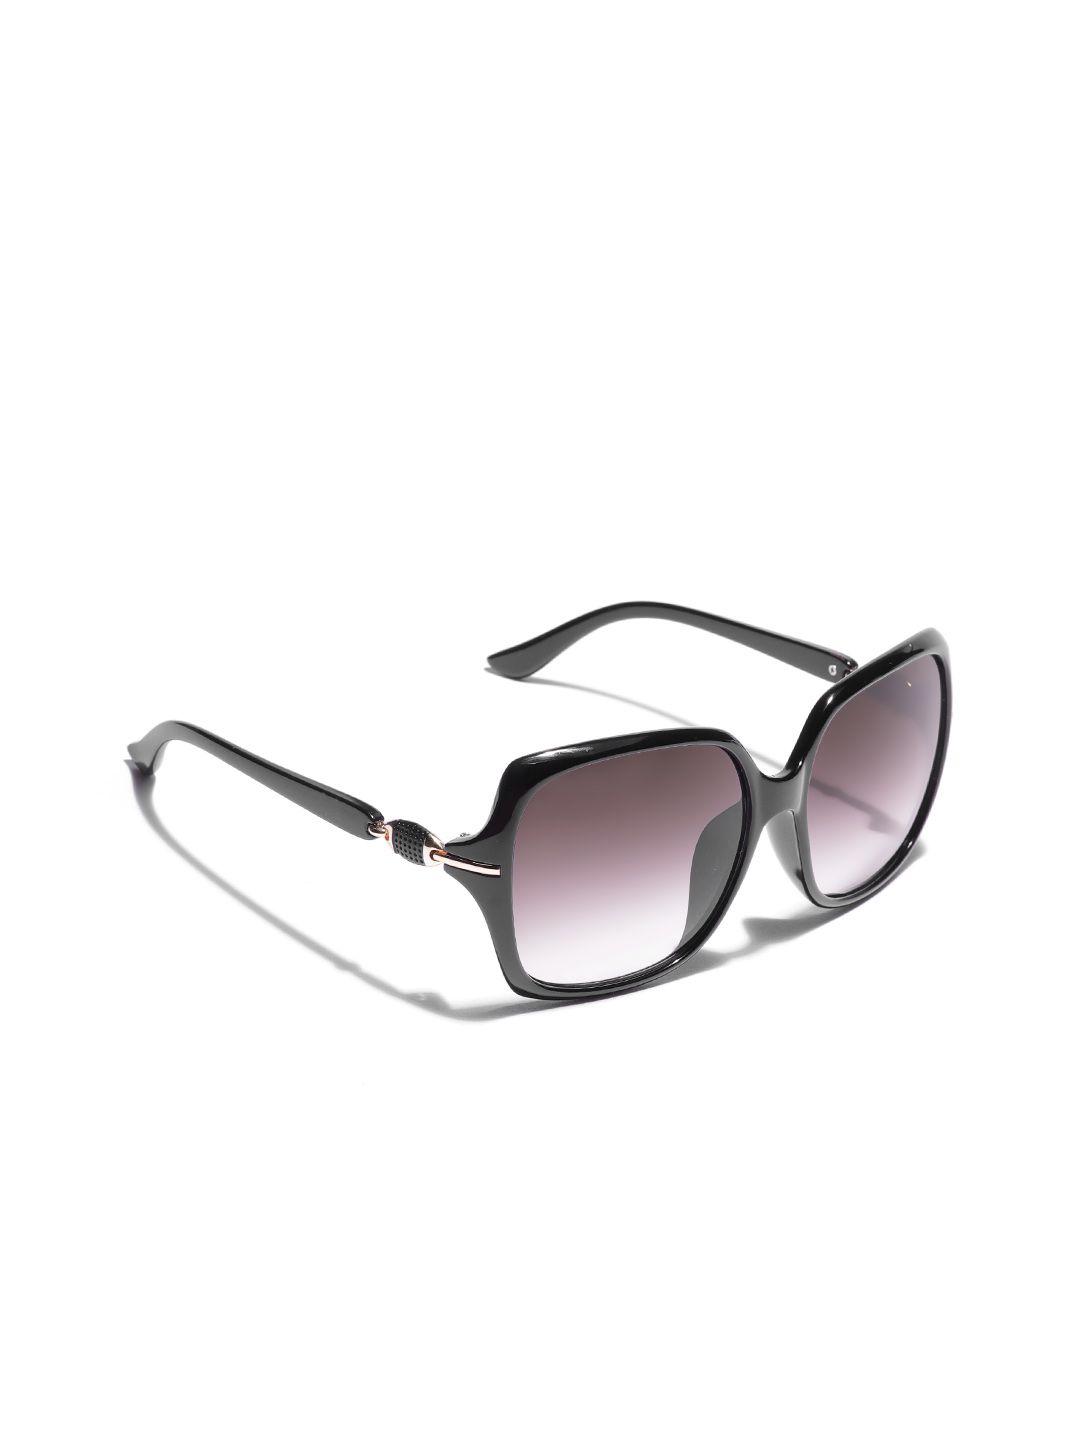 carlton london women blue lens & black oversized sunglasses with uv protected lens